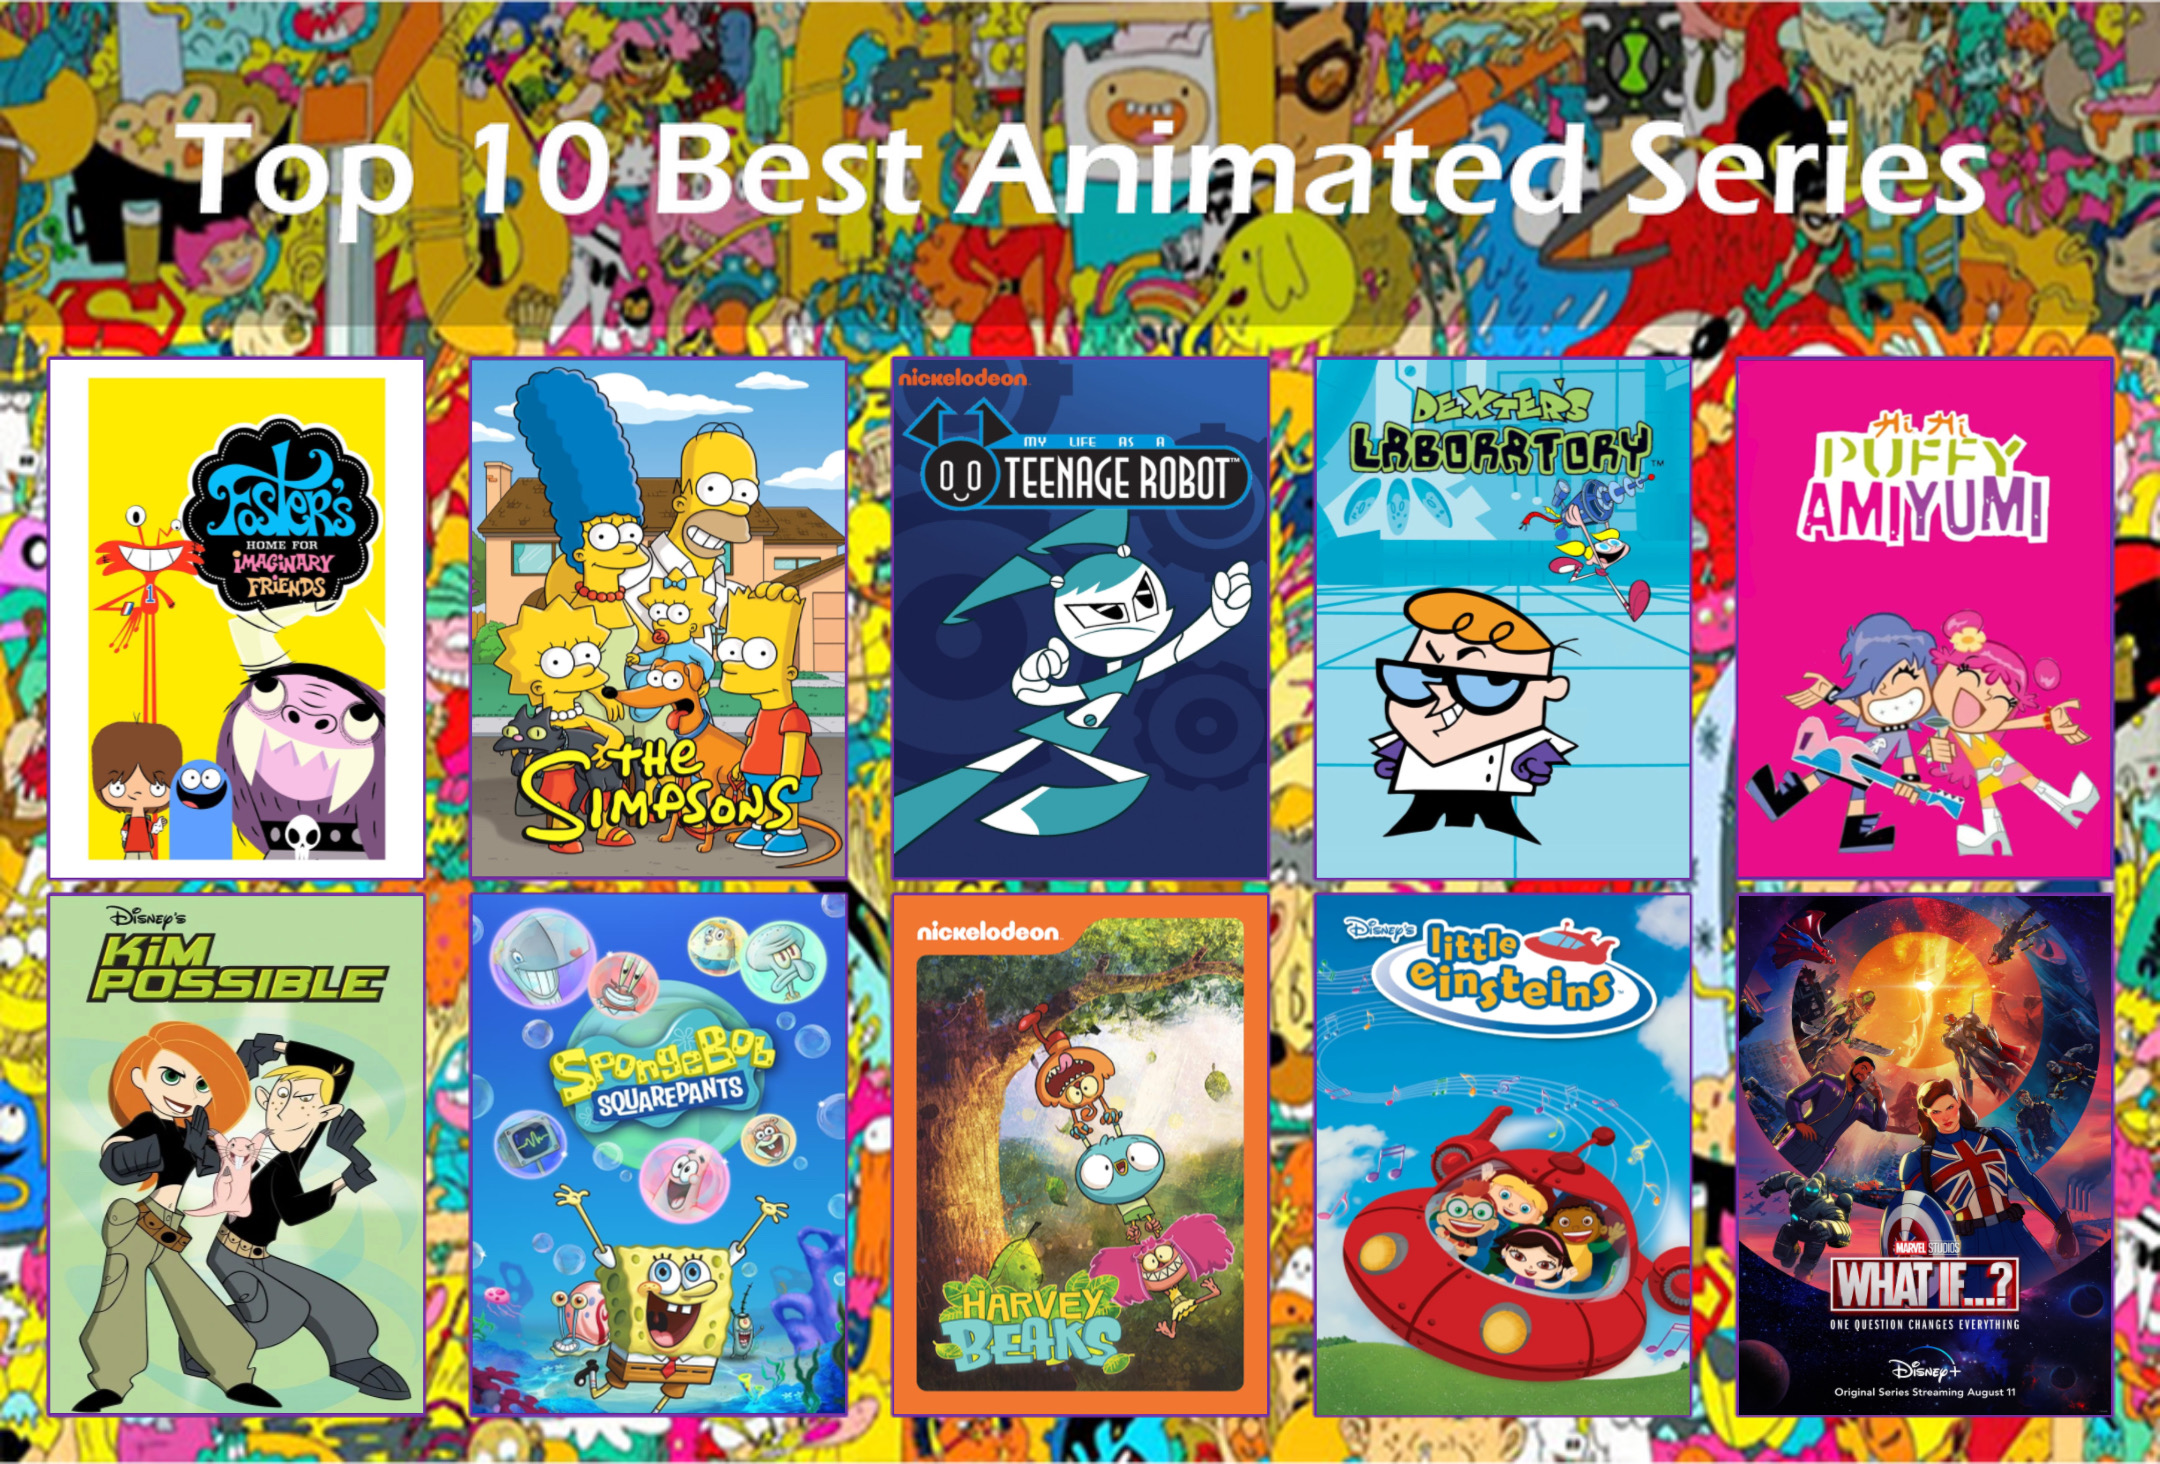 Top 10 Favourite Cartoon Network Shows by GeoNonnyJenny on DeviantArt